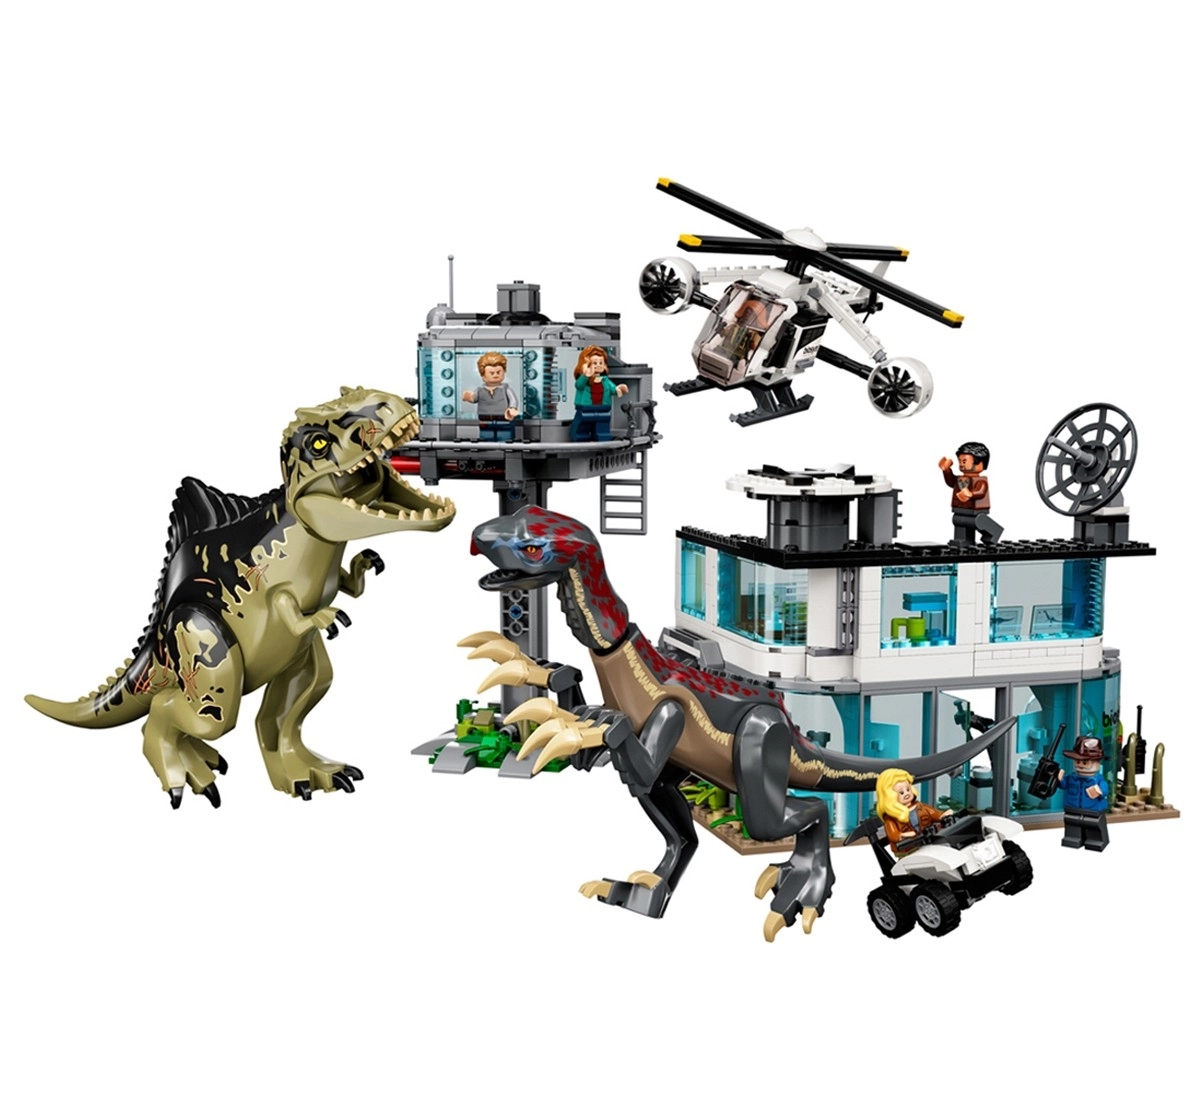 LEGO Jurassic World Giganotosaurus &amp Therizinosaurus Attack 76949 658 Pieces Multicolour 9Y+